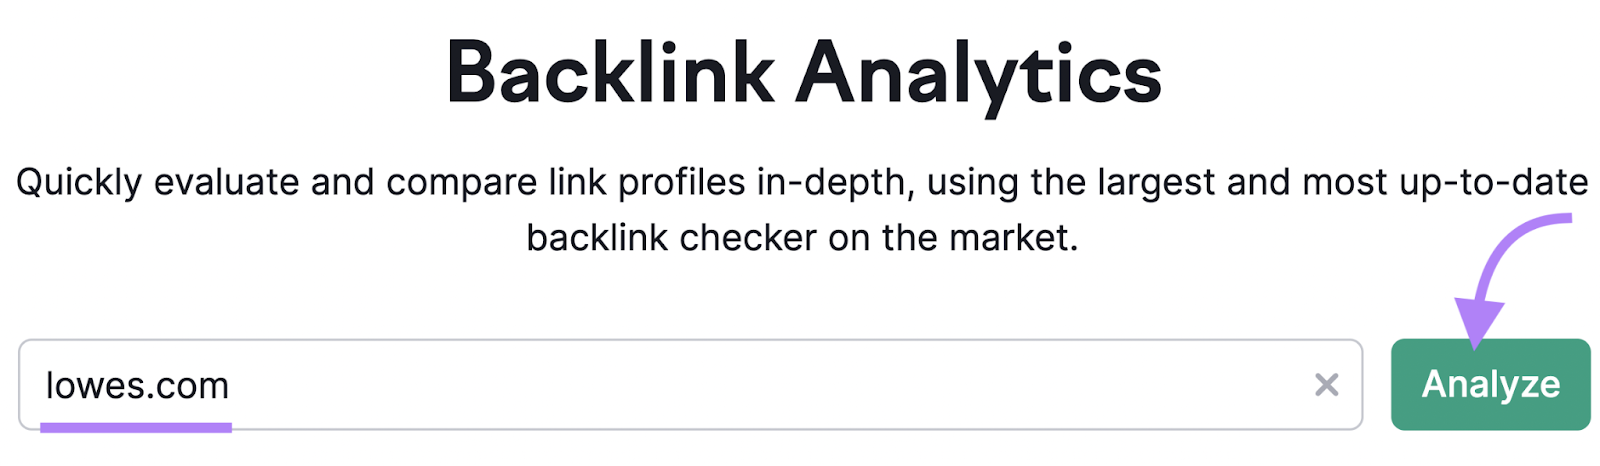 lowes.com را در ابزار Backlink Analytics جستجو کنید